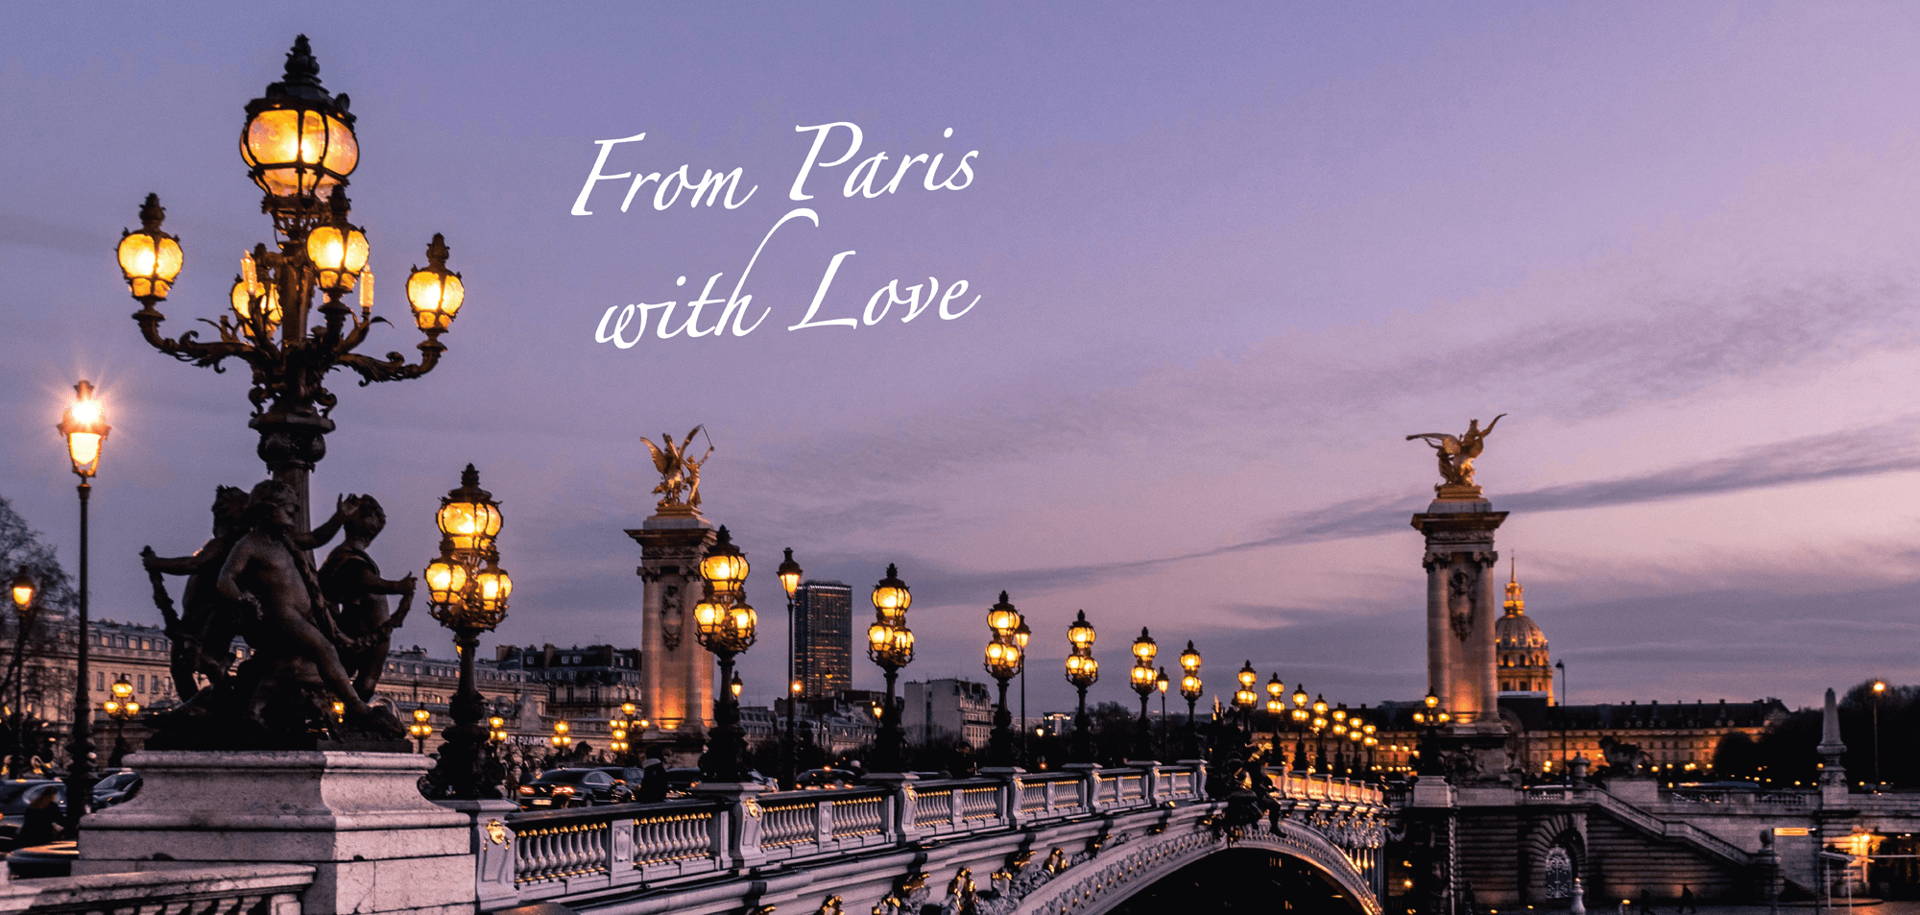 From Paris with love Pont des Invalides